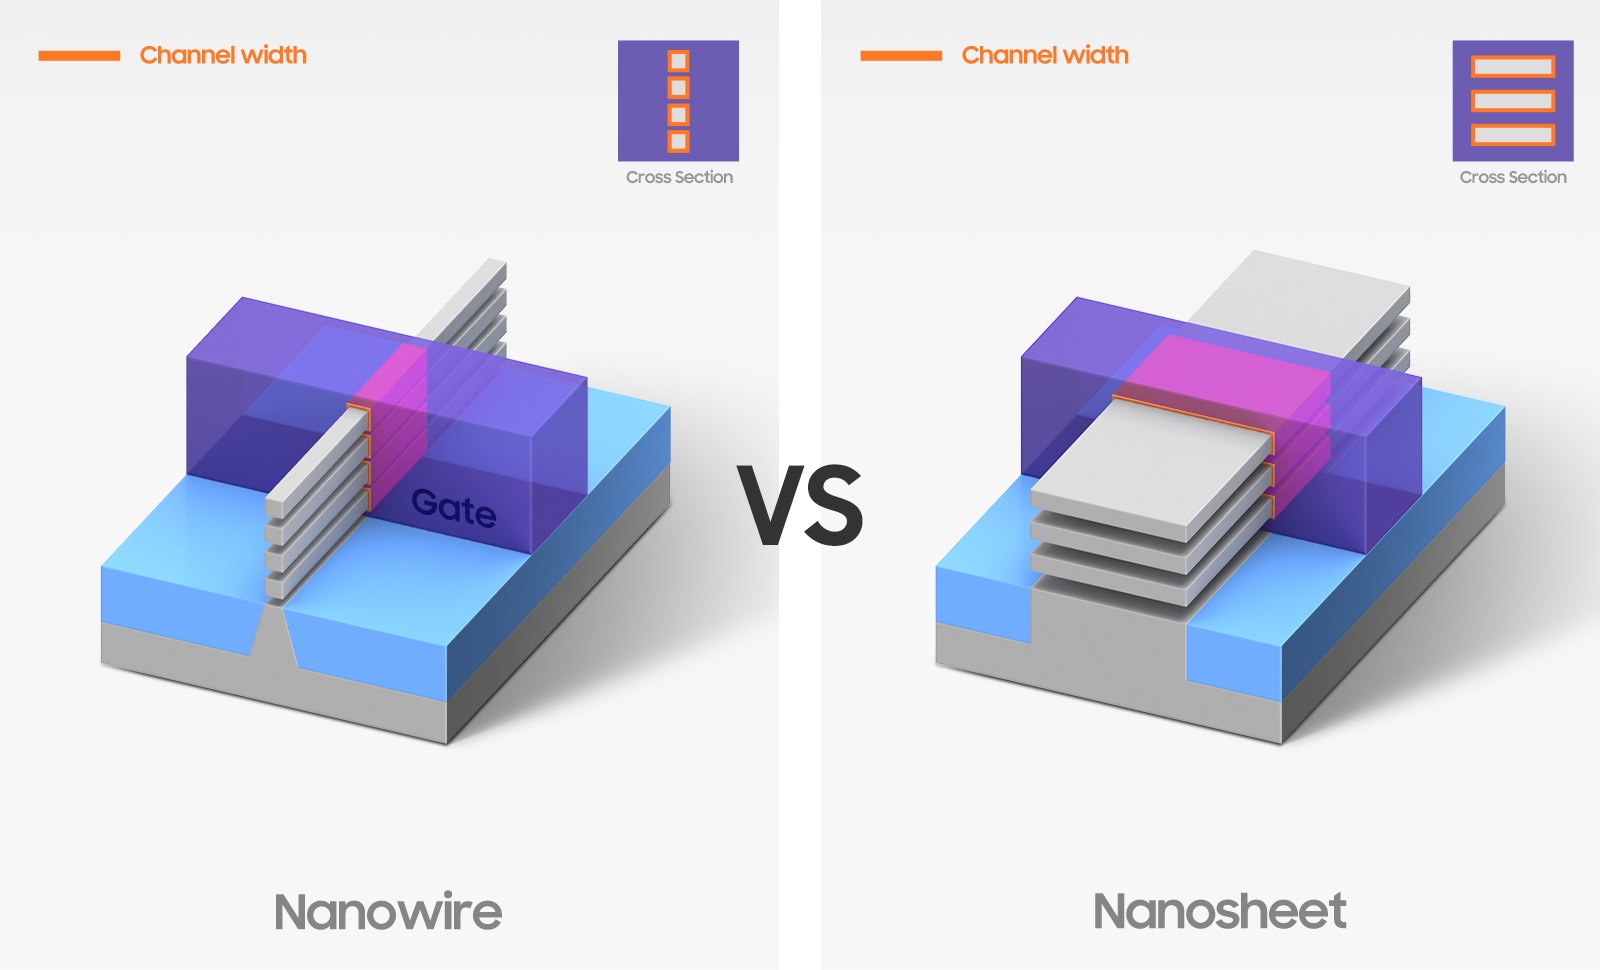 Illustration comparing Nanowire and NanoSheet structures